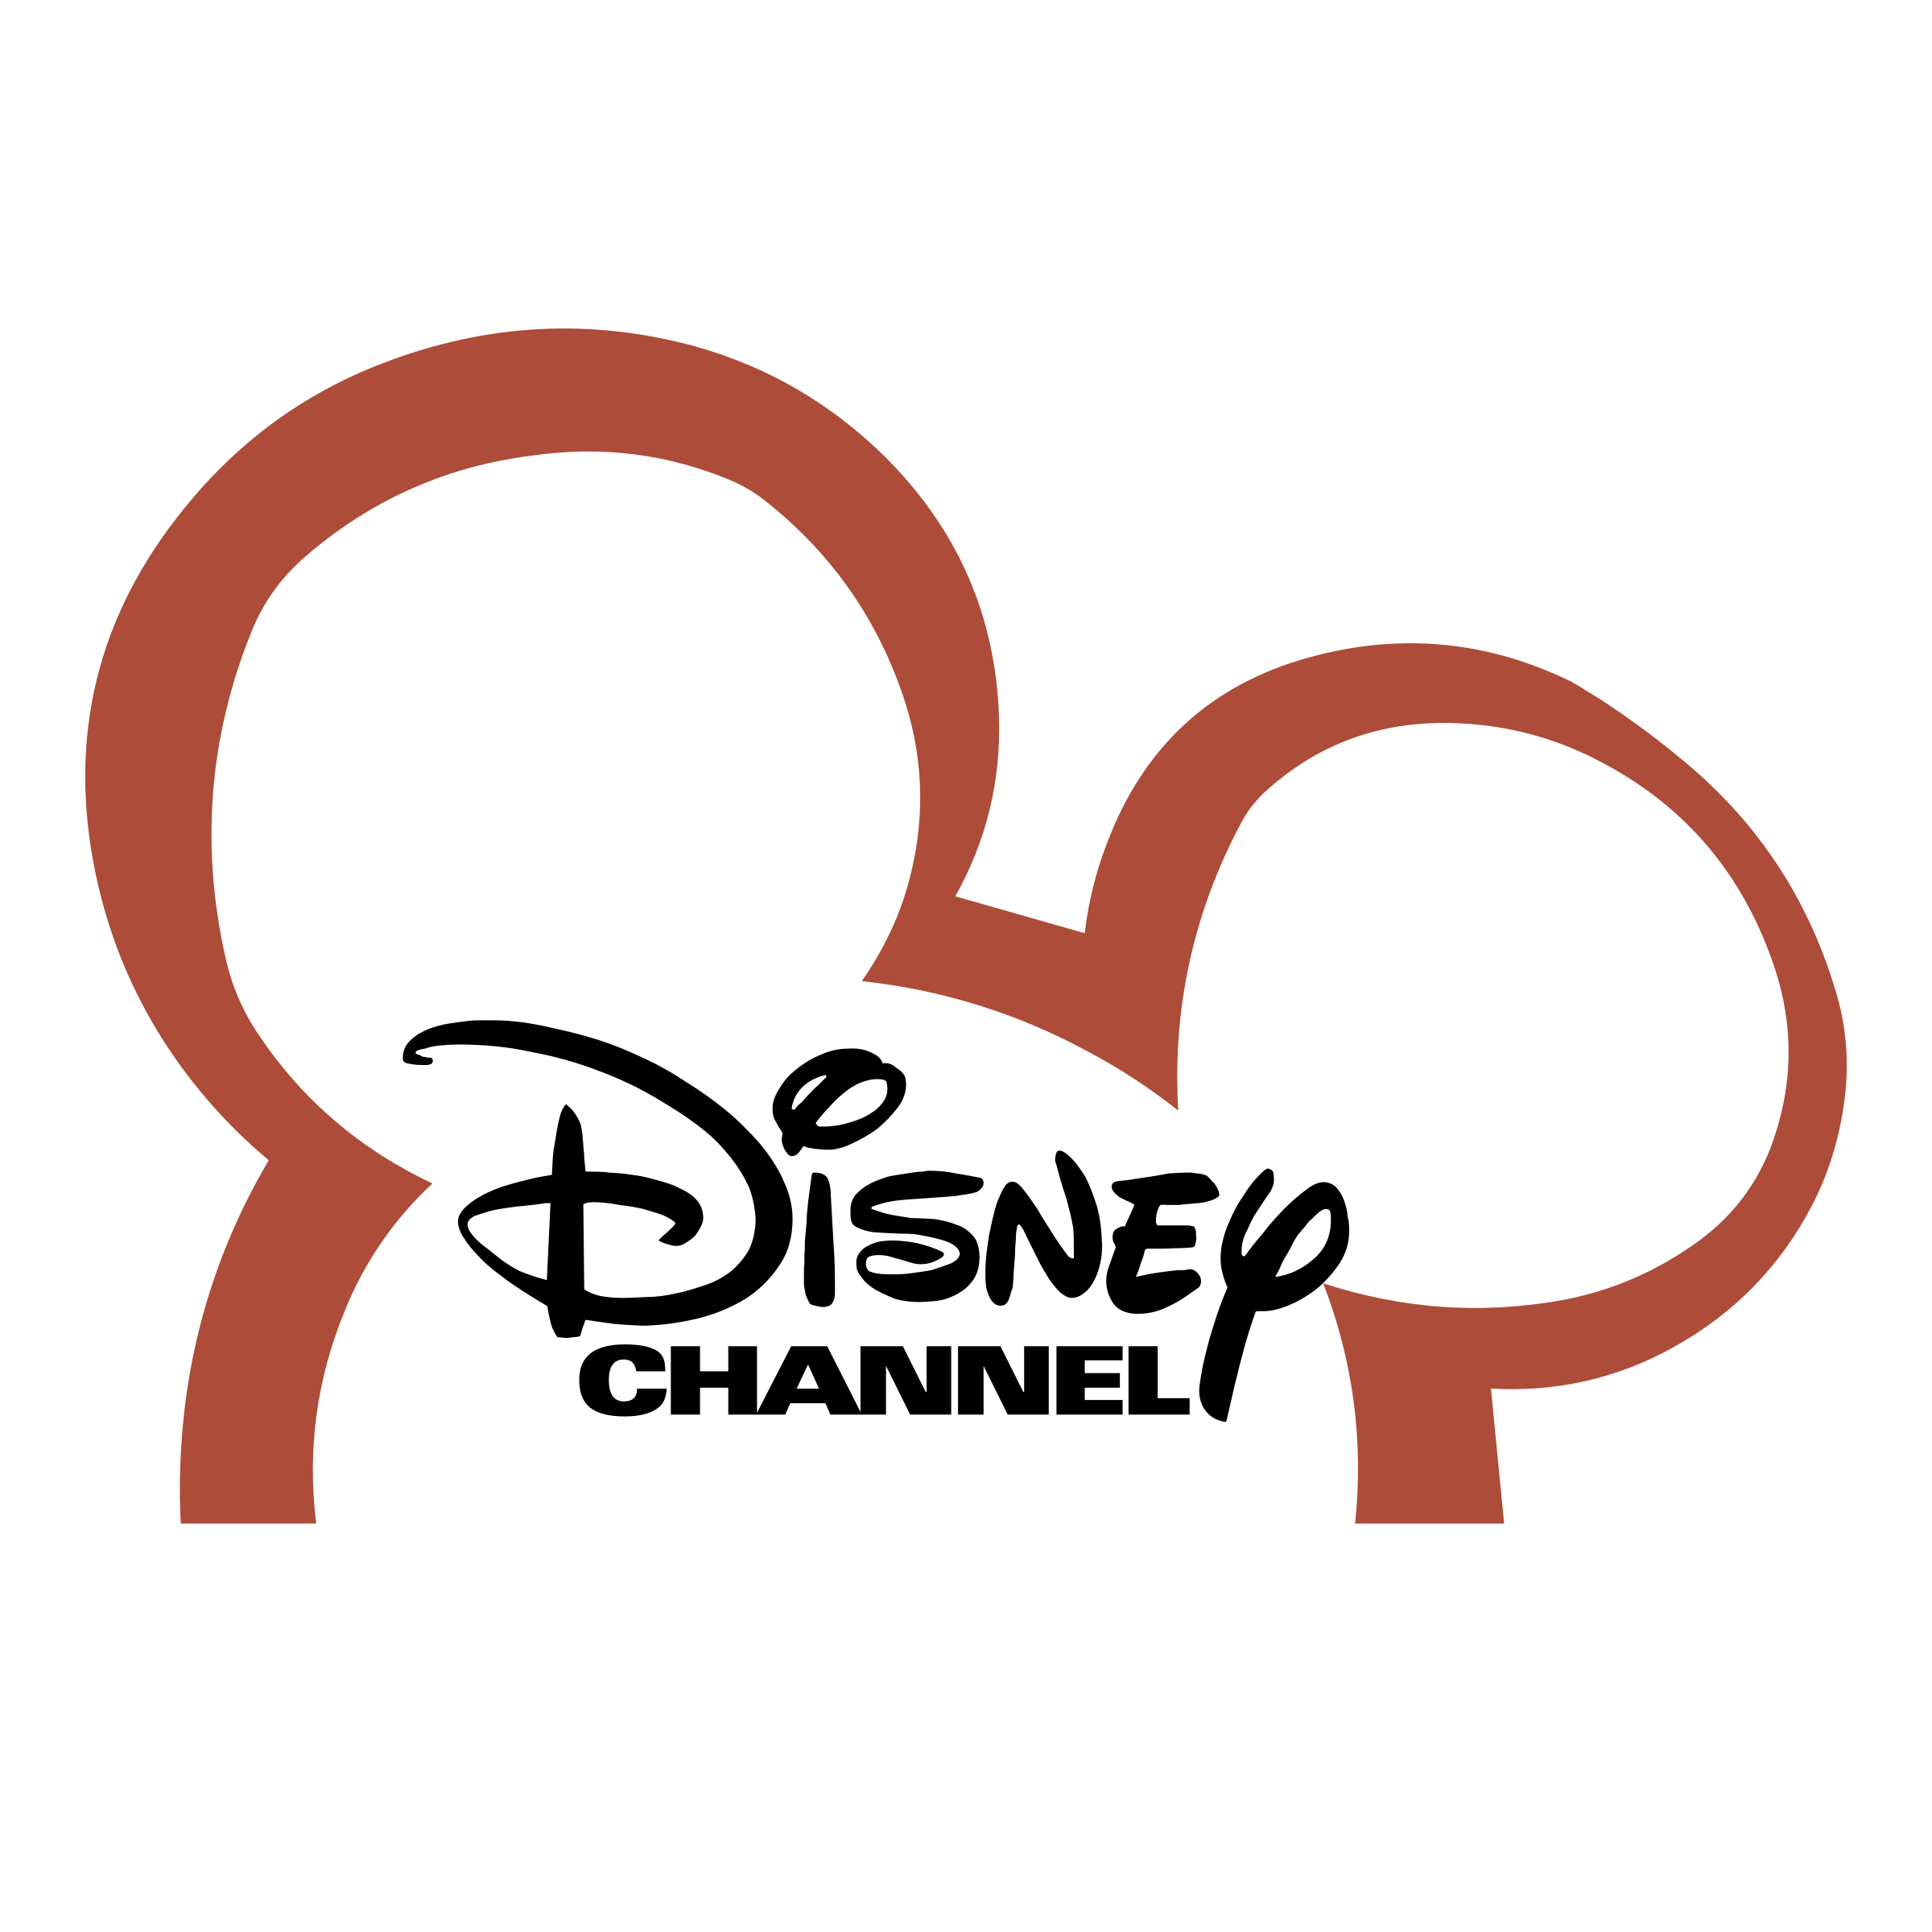 Disney.com Logo - Disney Channel Logo PNG Transparent & SVG Vector